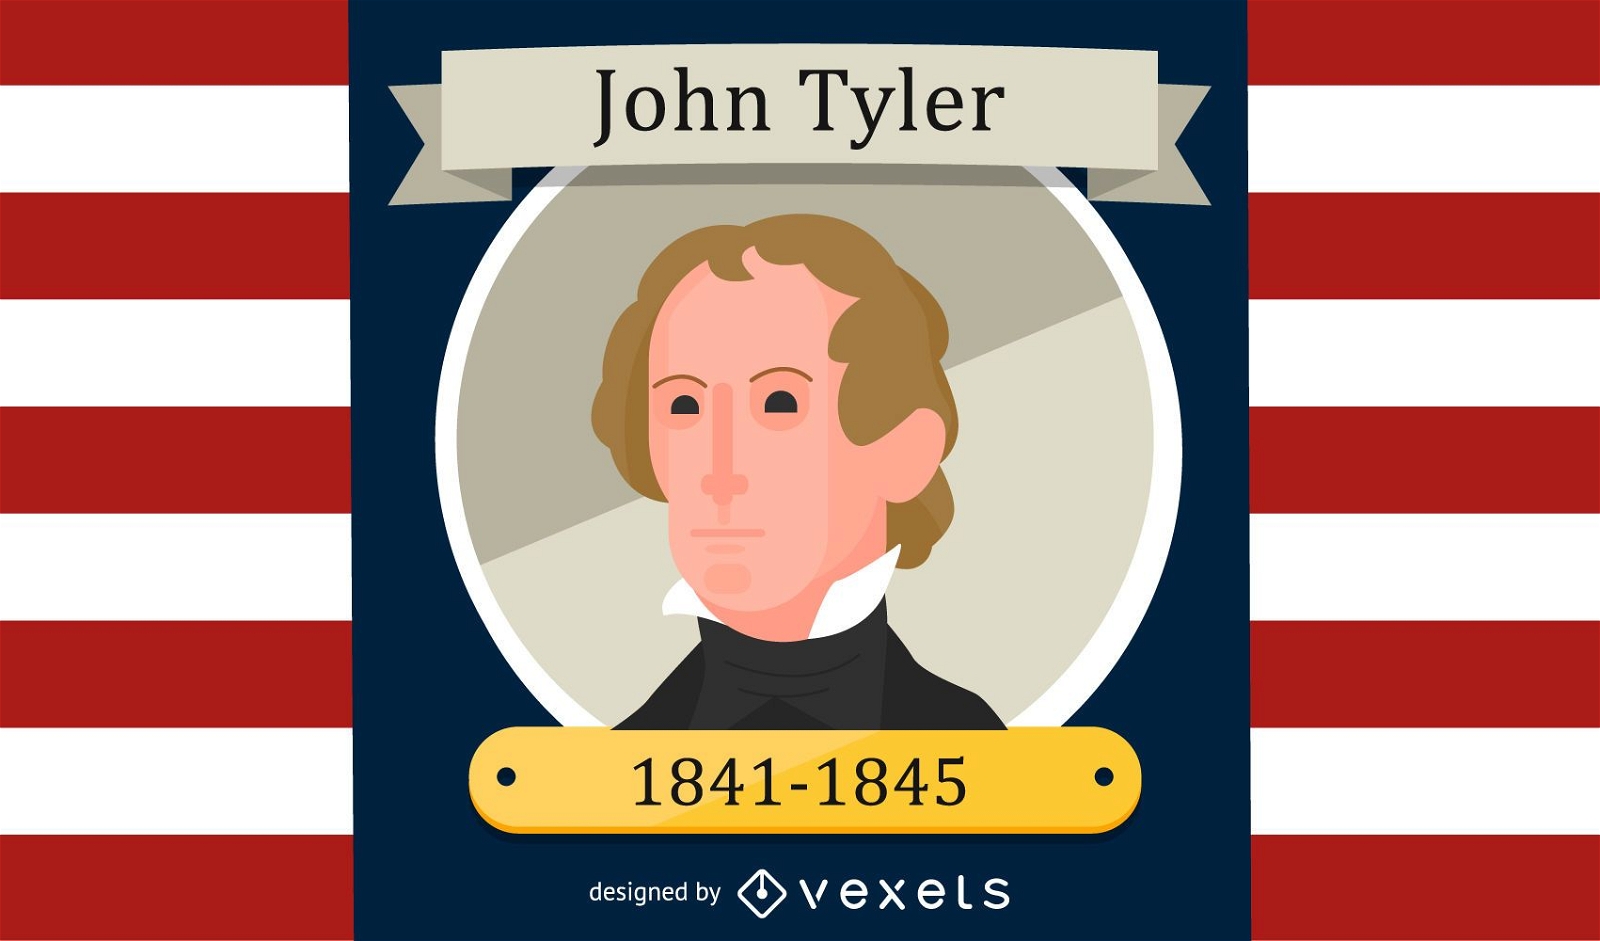 John Tyler Cartoon Portrait 